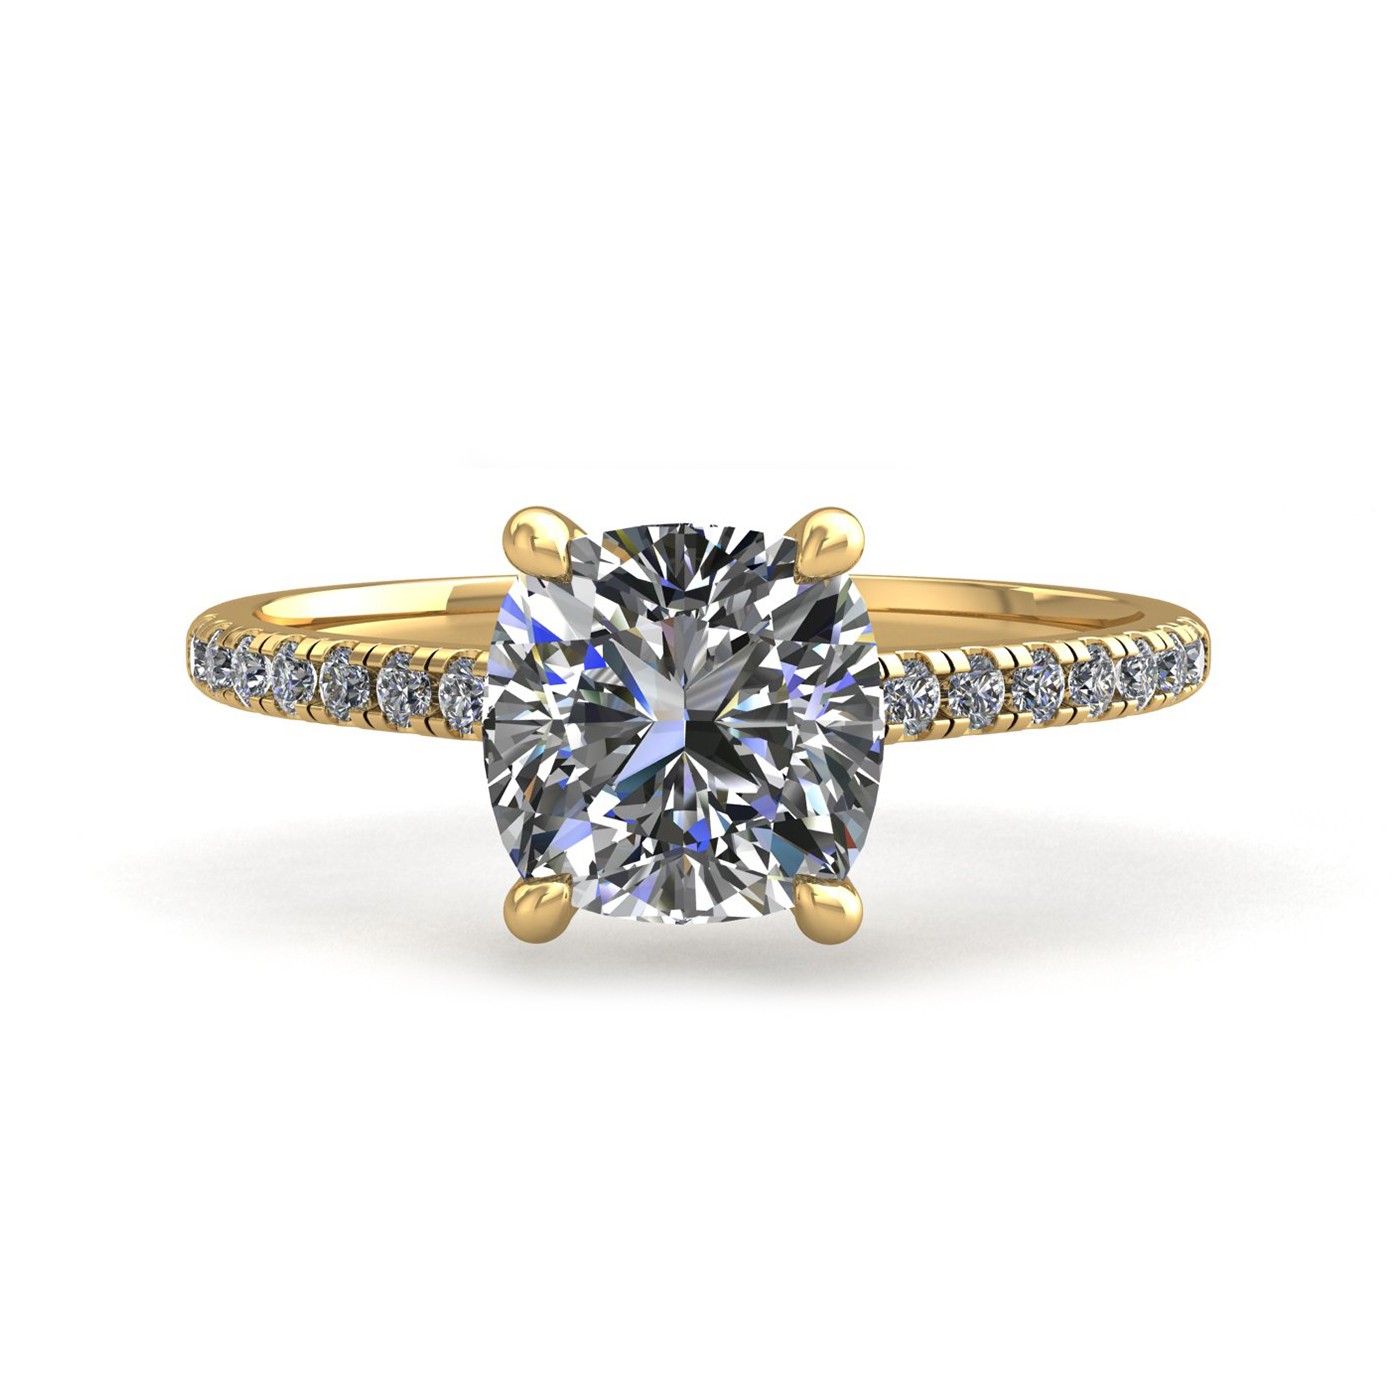 18k yellow gold 1.5ct 4 prongs cushion cut diamond engagement ring with whisper thin pavÉ set band